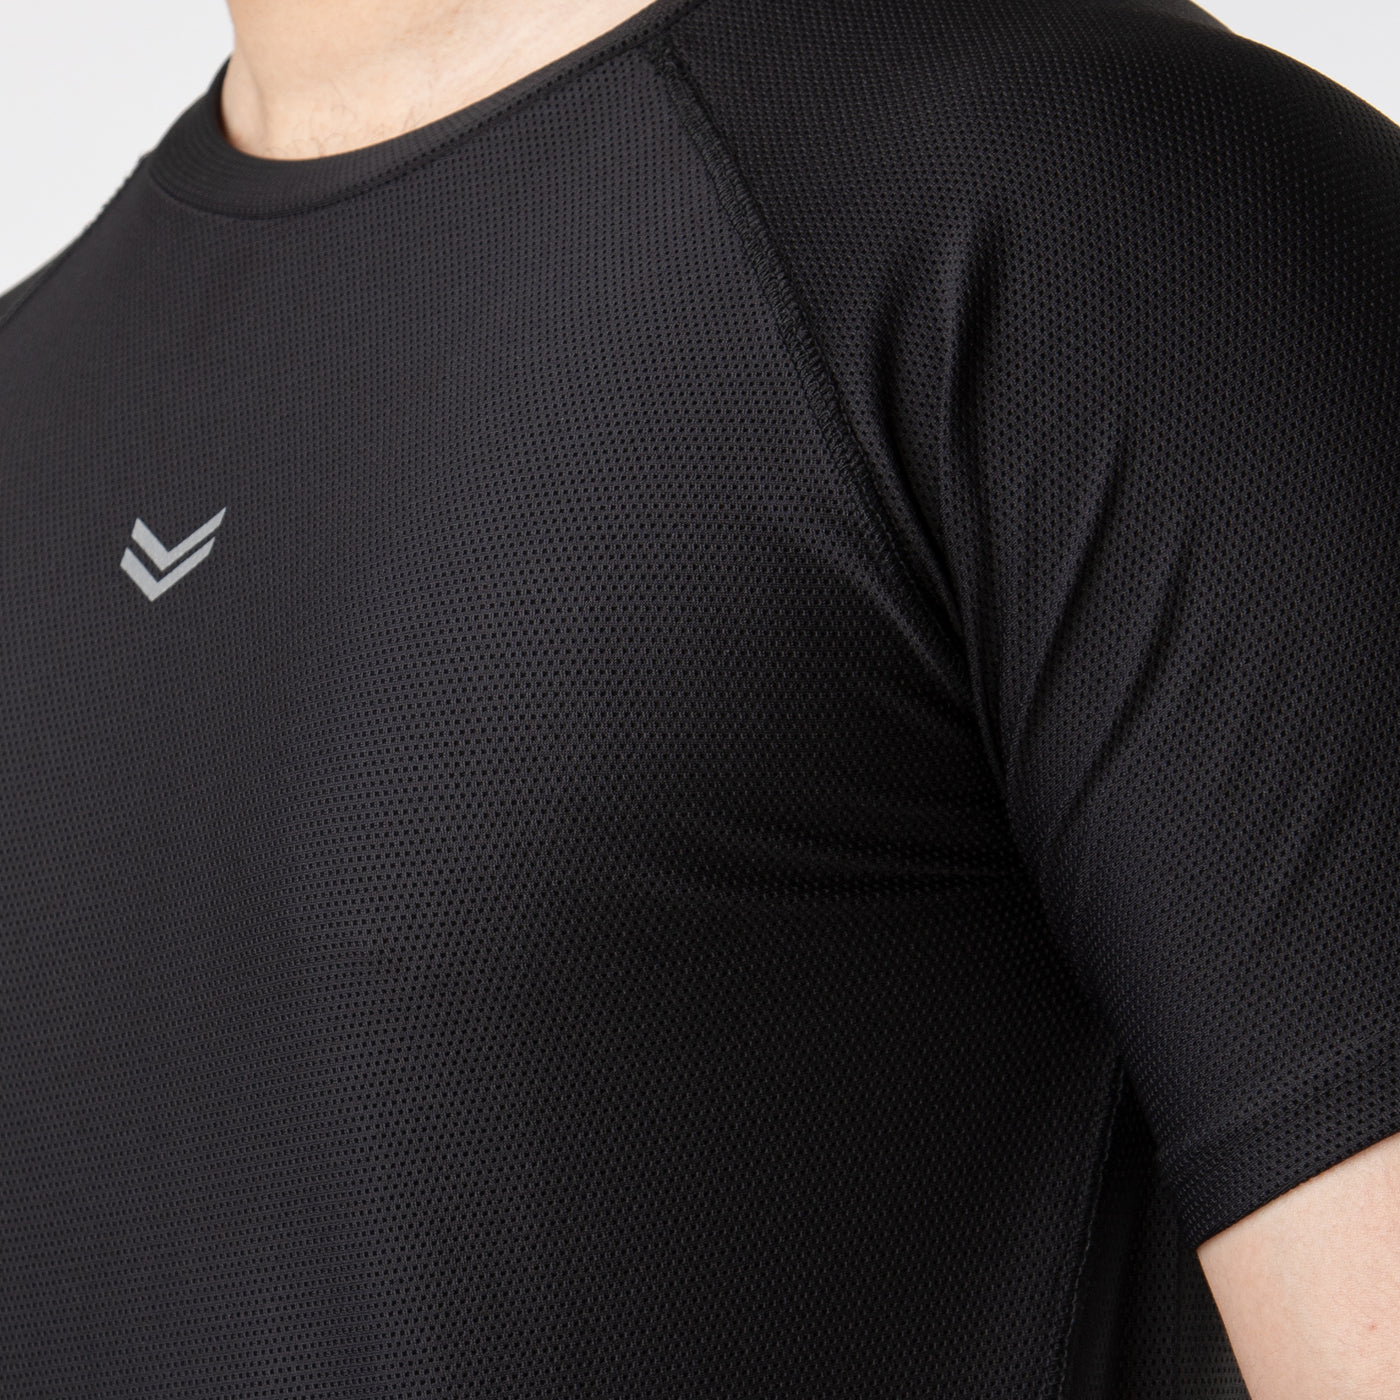 Black Lycra Mesh 4-Way Stretch Training T-Shirt with Reflective Logo